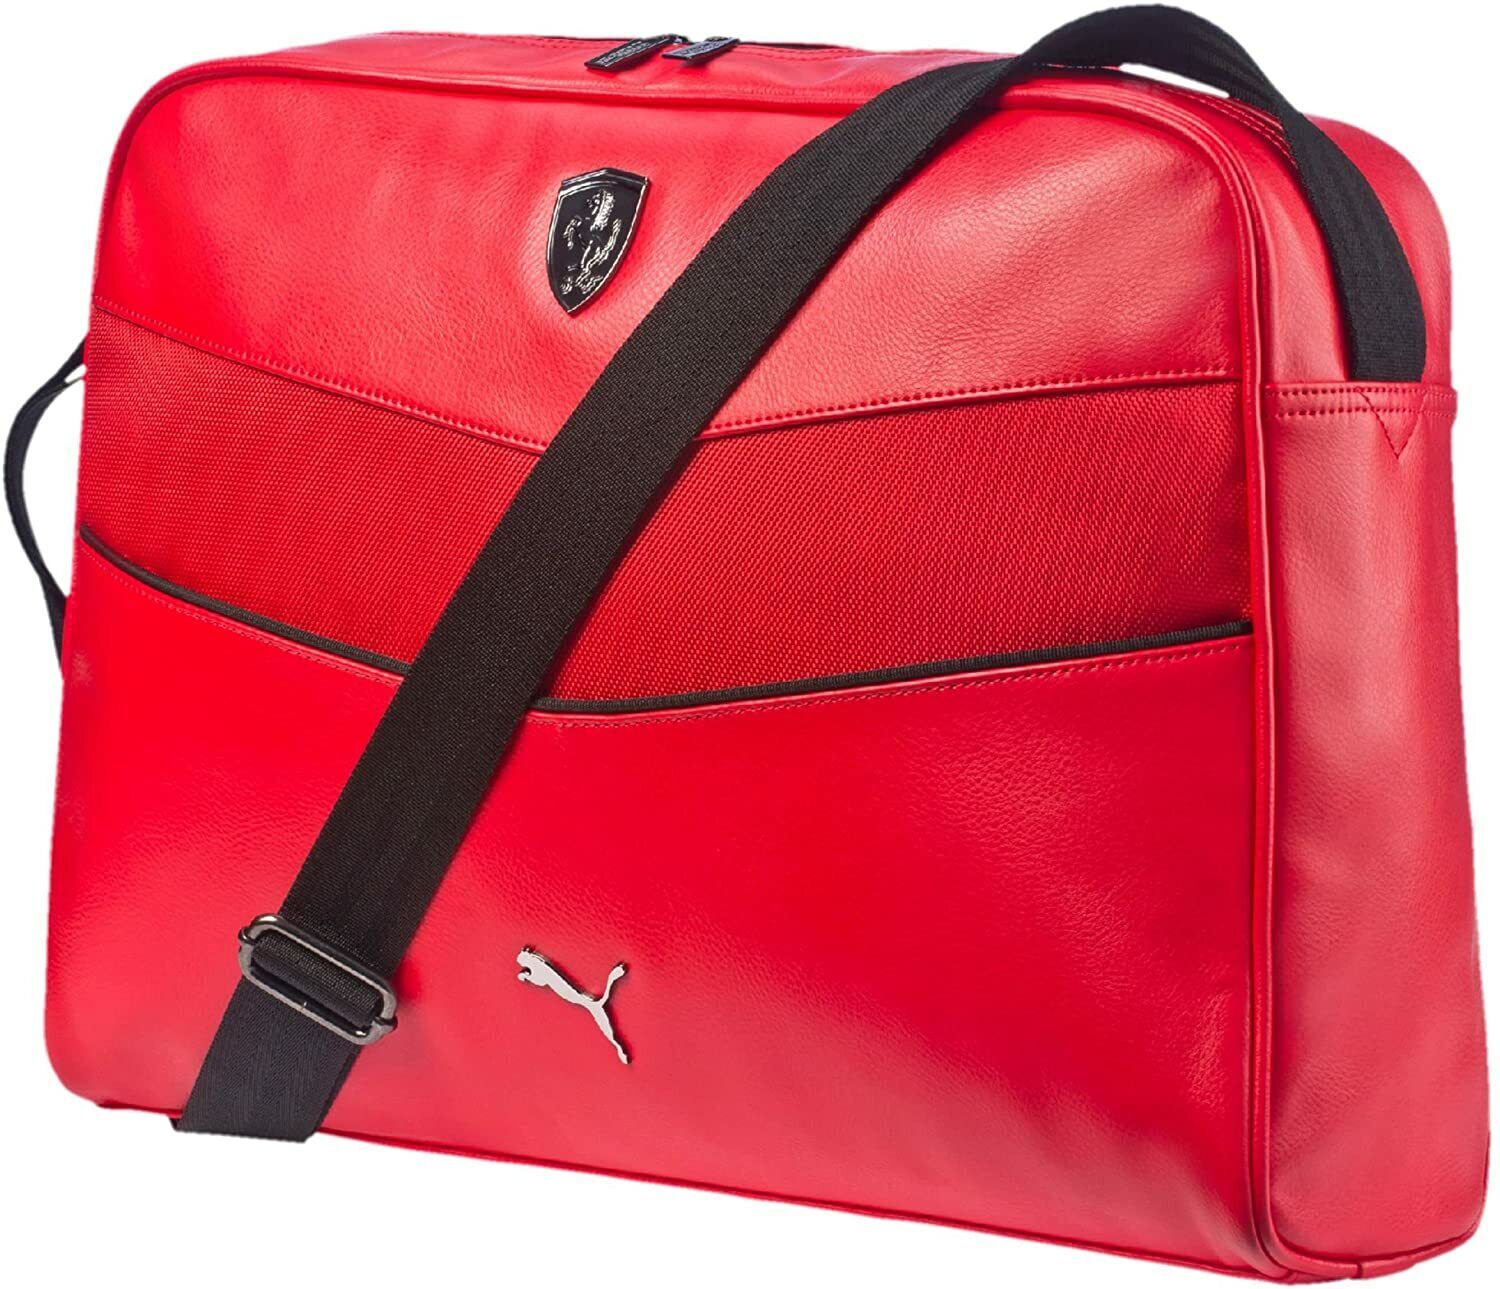 local Anestésico Ewell Puma Ferrari LS Reporter Bag Shoulder Bag Red Ferrari official licensed  series 4056204111116 | eBay